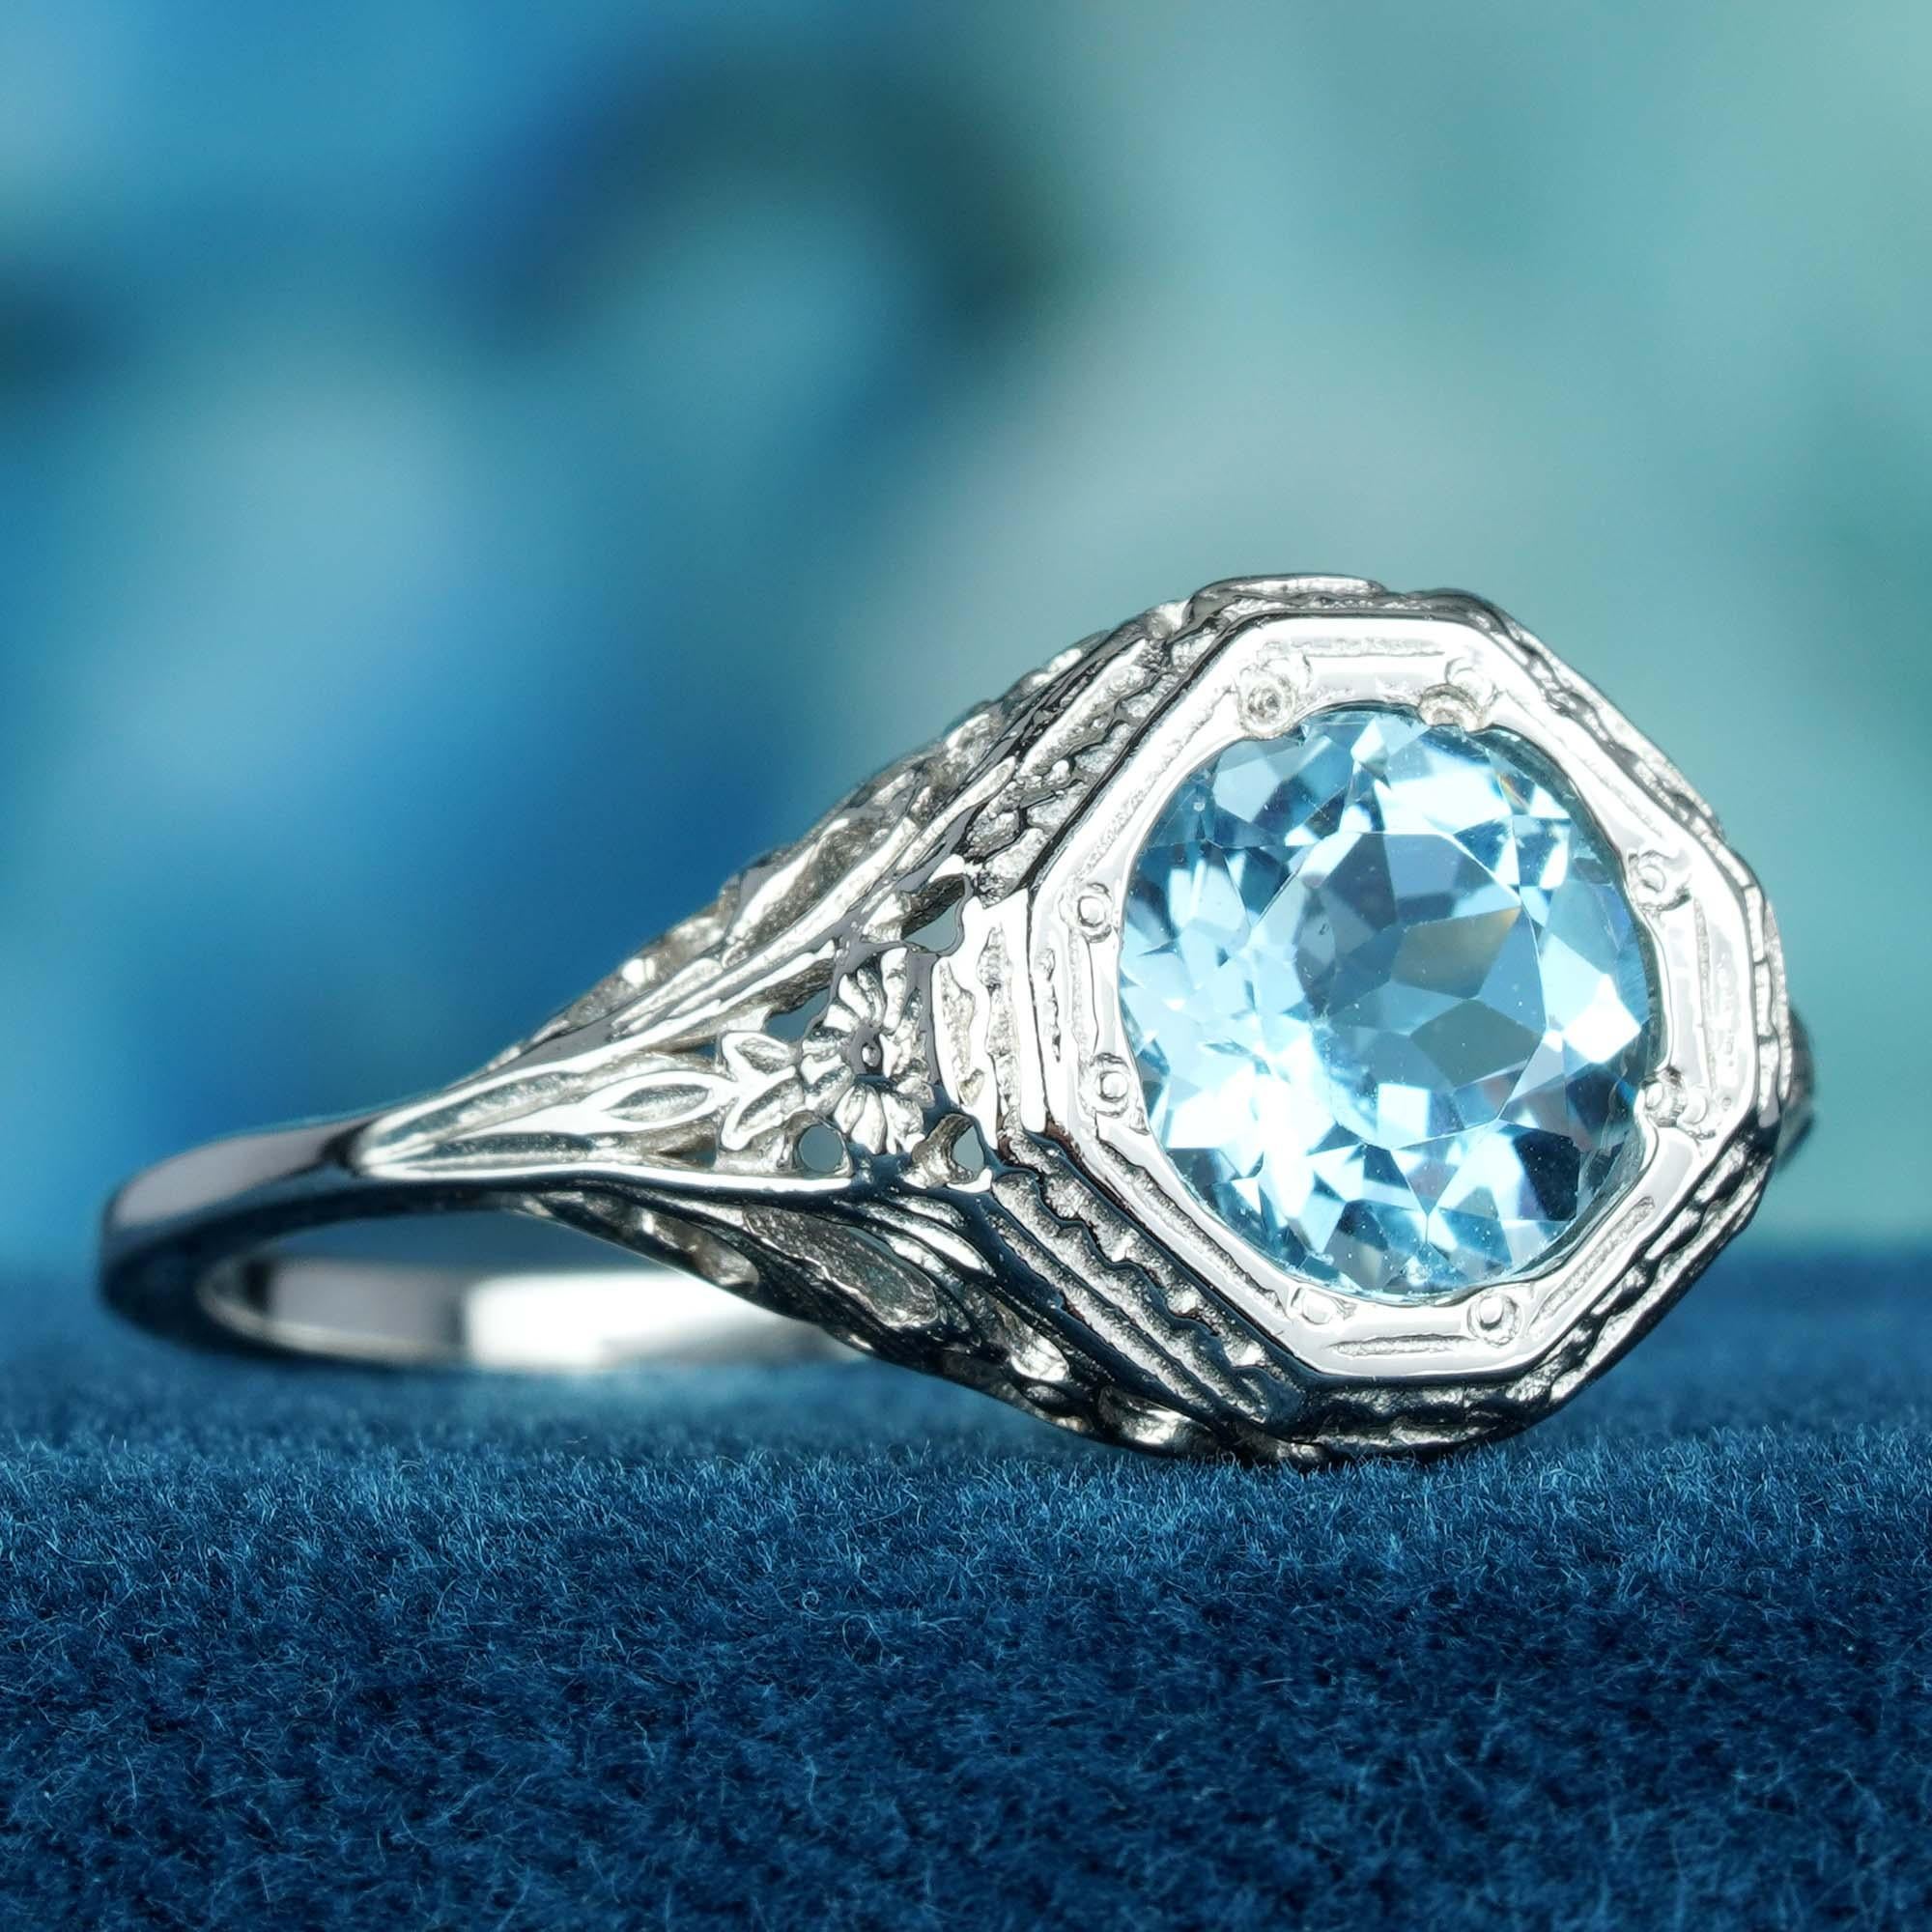 For Sale:  Natural Blue Topaz Vintage Style Filigree Ring in Solid 9K White Gold 3